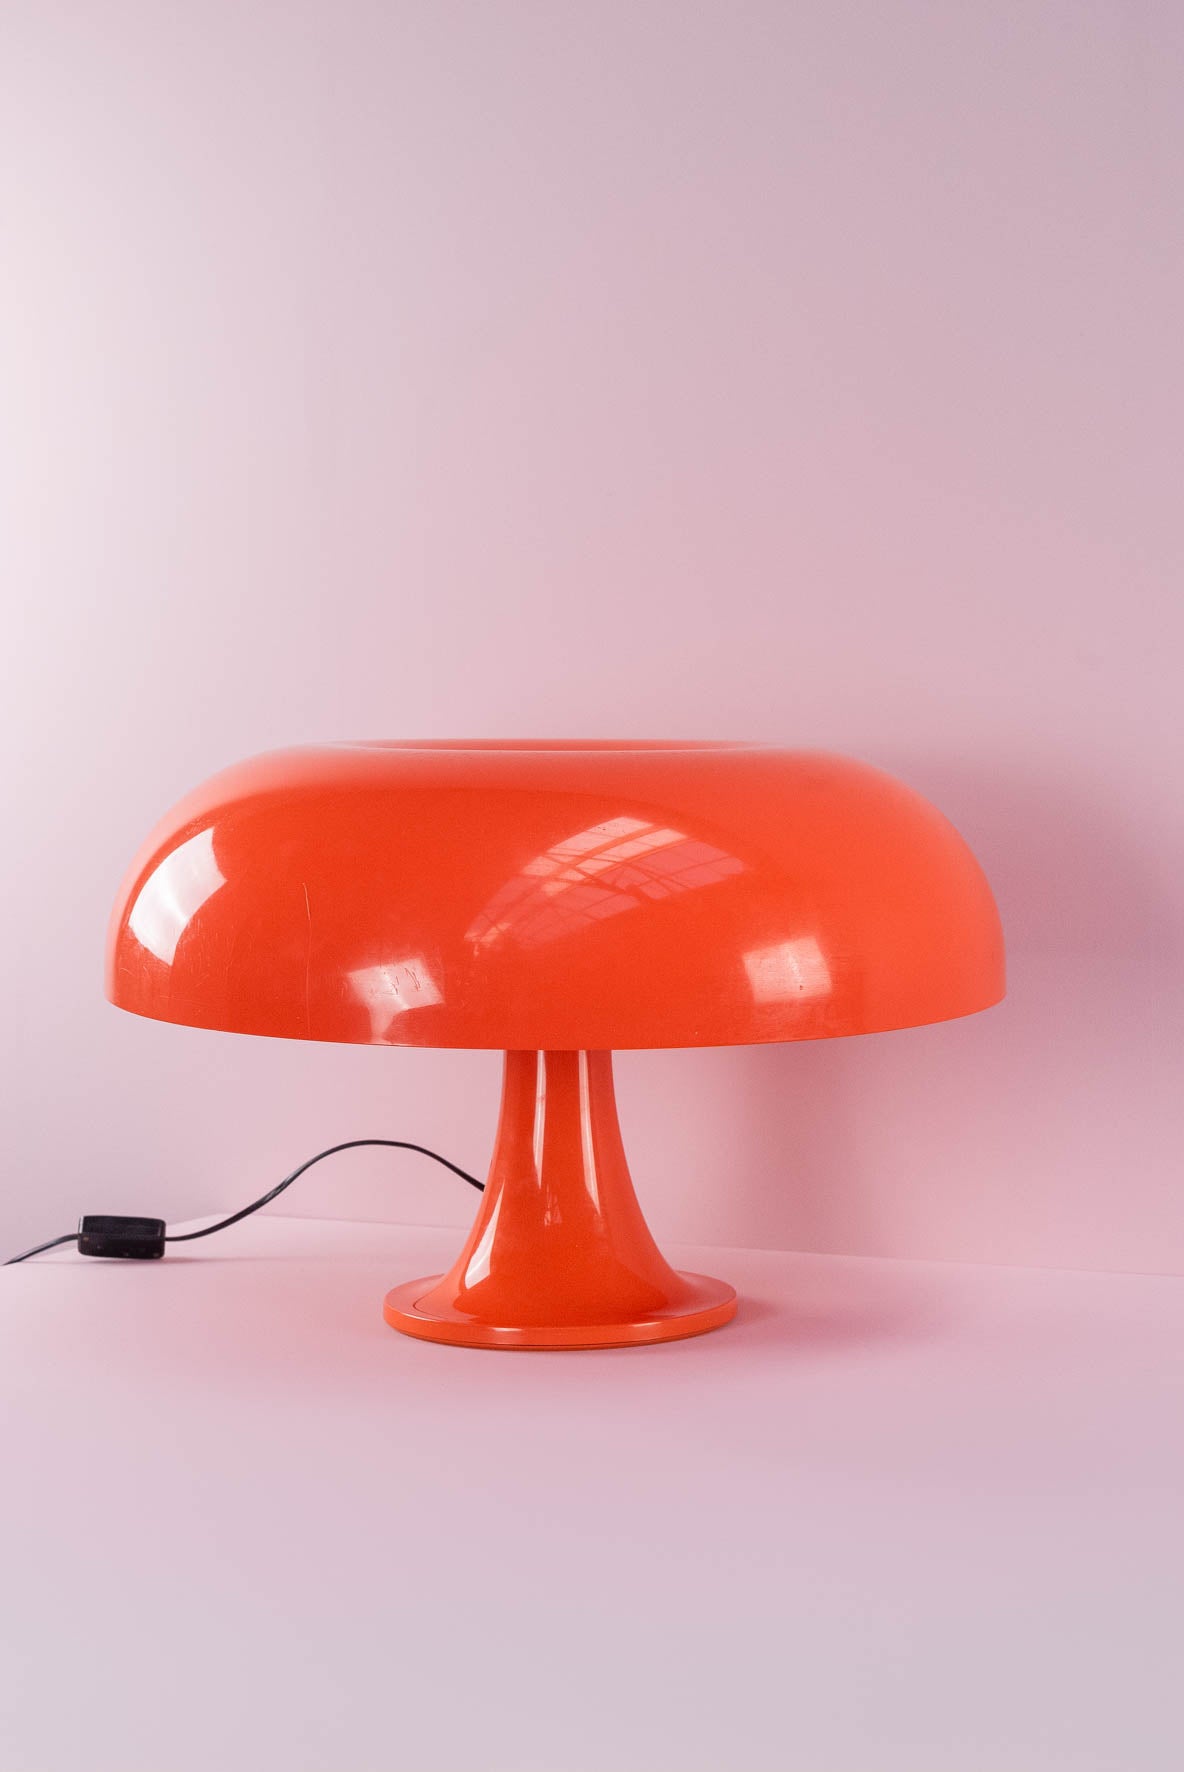 Vintage Nesso table lamp by Giancarlo Mattioli and Urbanisti Citta Nuova for Artemide